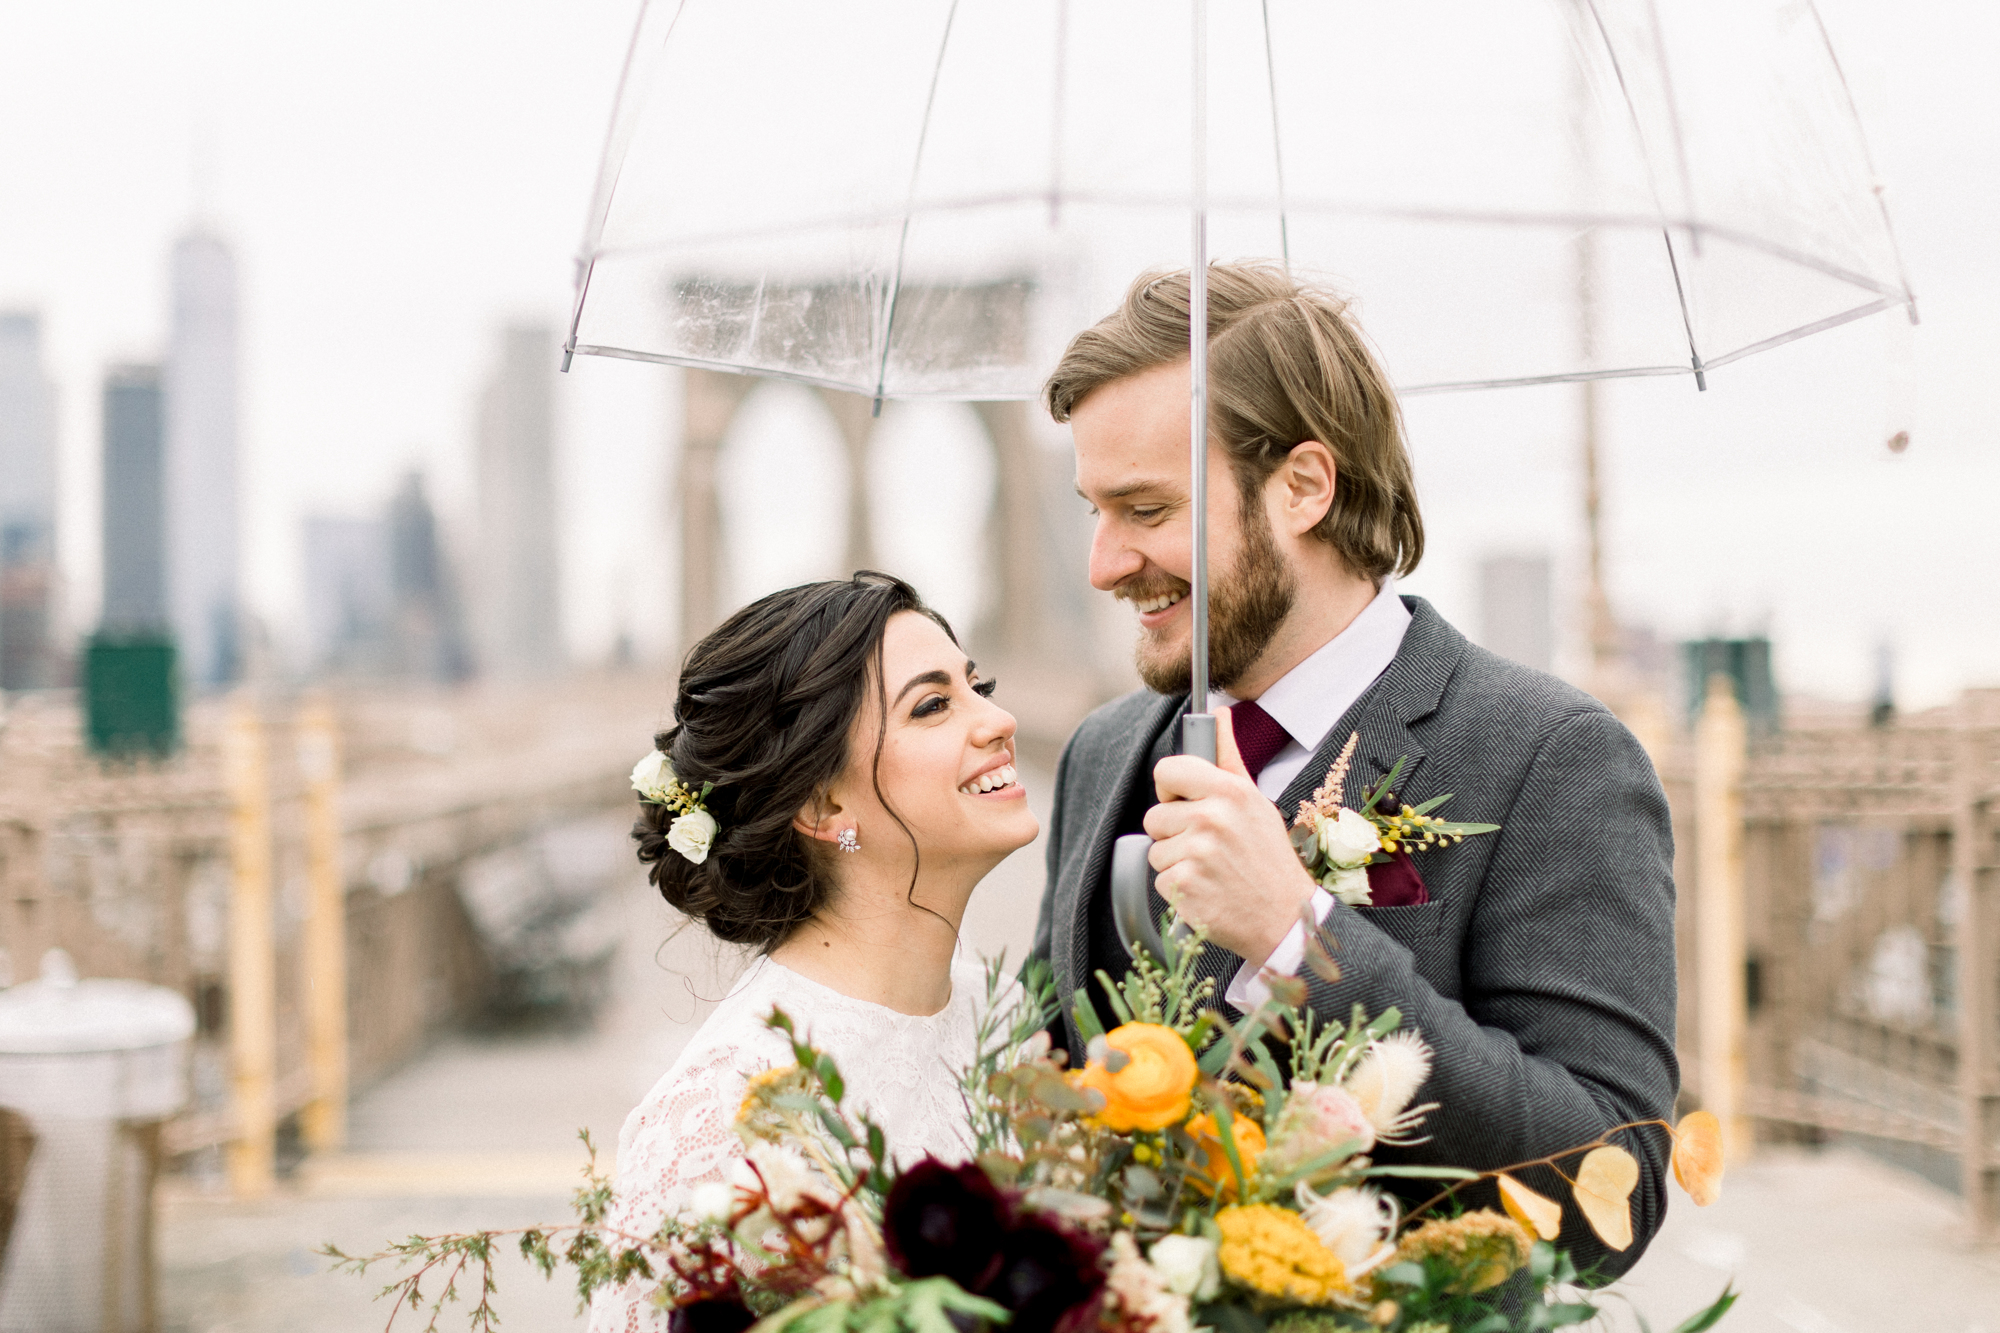 Rainy wedding photos on the Brooklyn Bridge